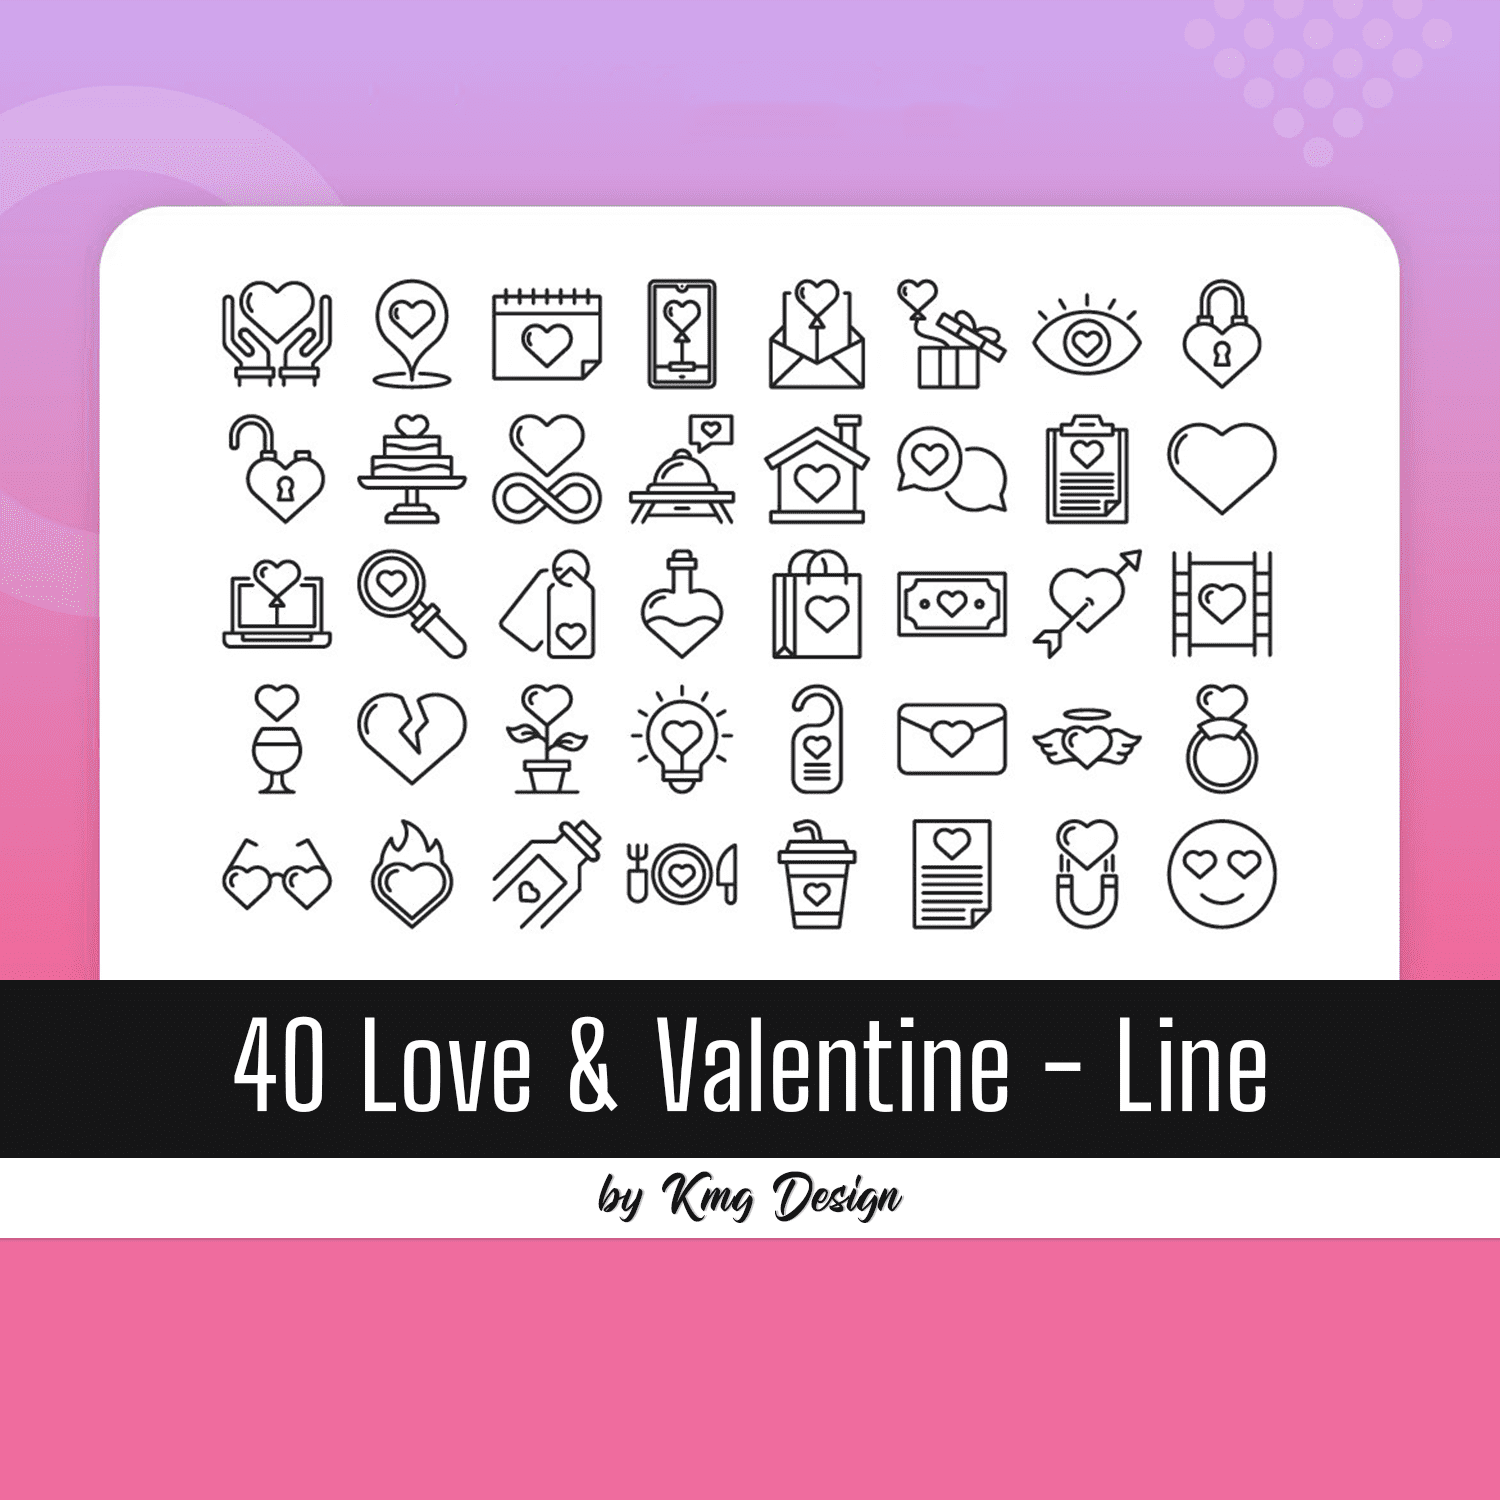 40 Love & Valentine - Line Cover.